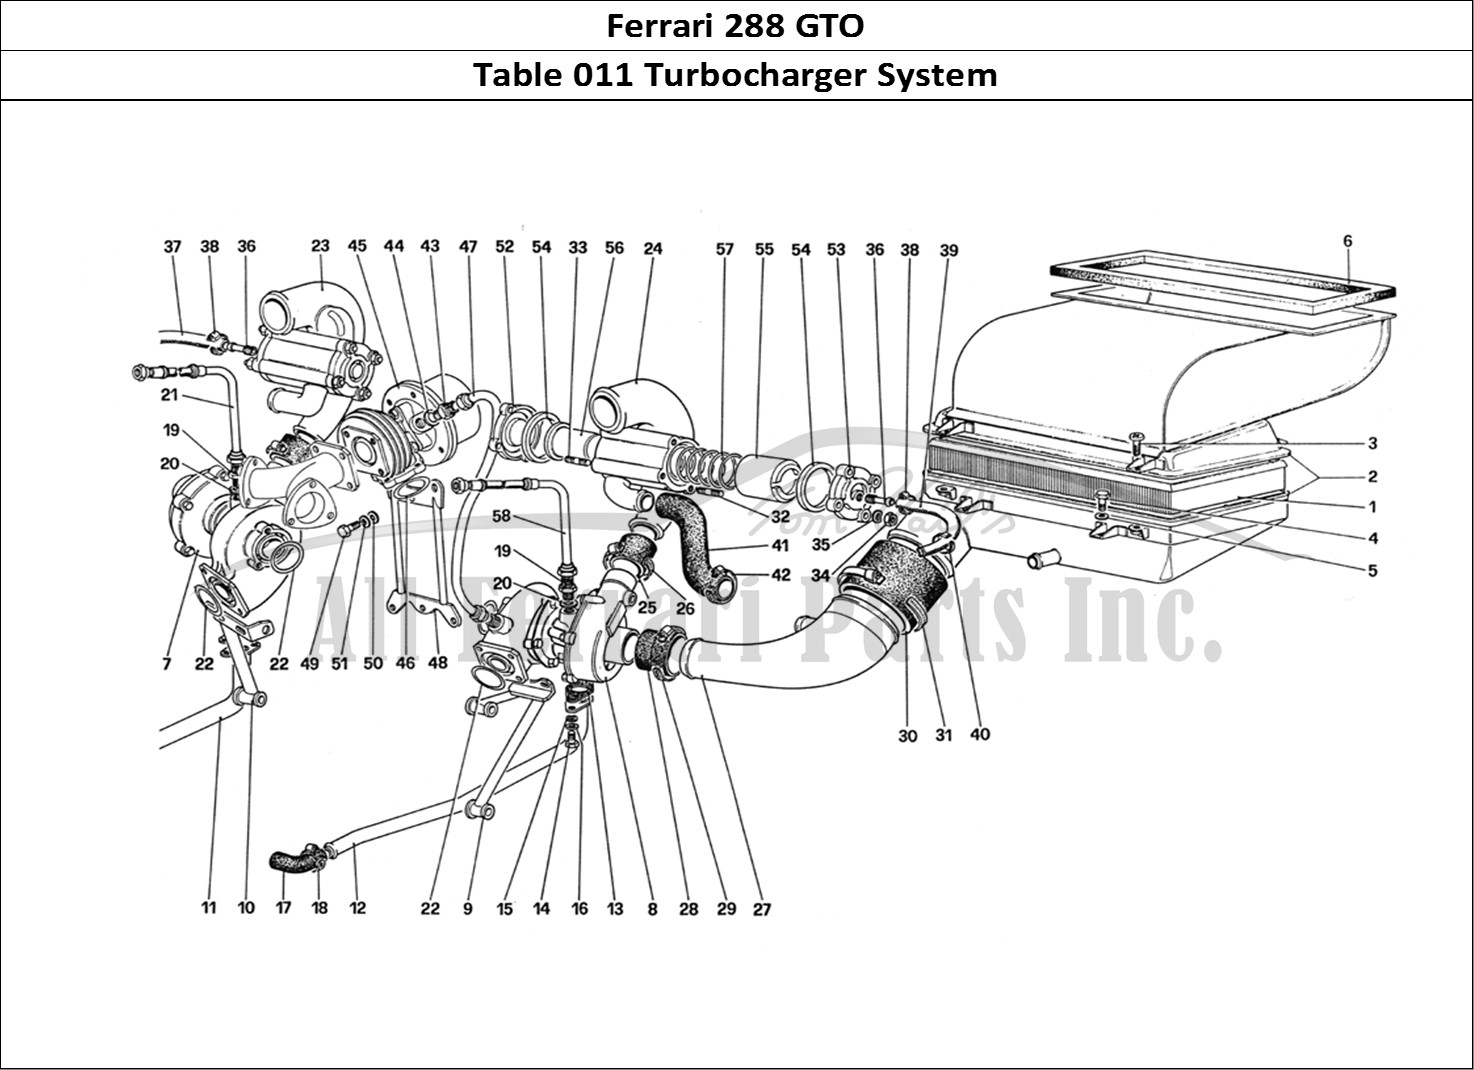 Ferrari Parts Ferrari 288 GTO Page 011 Turbocharging System